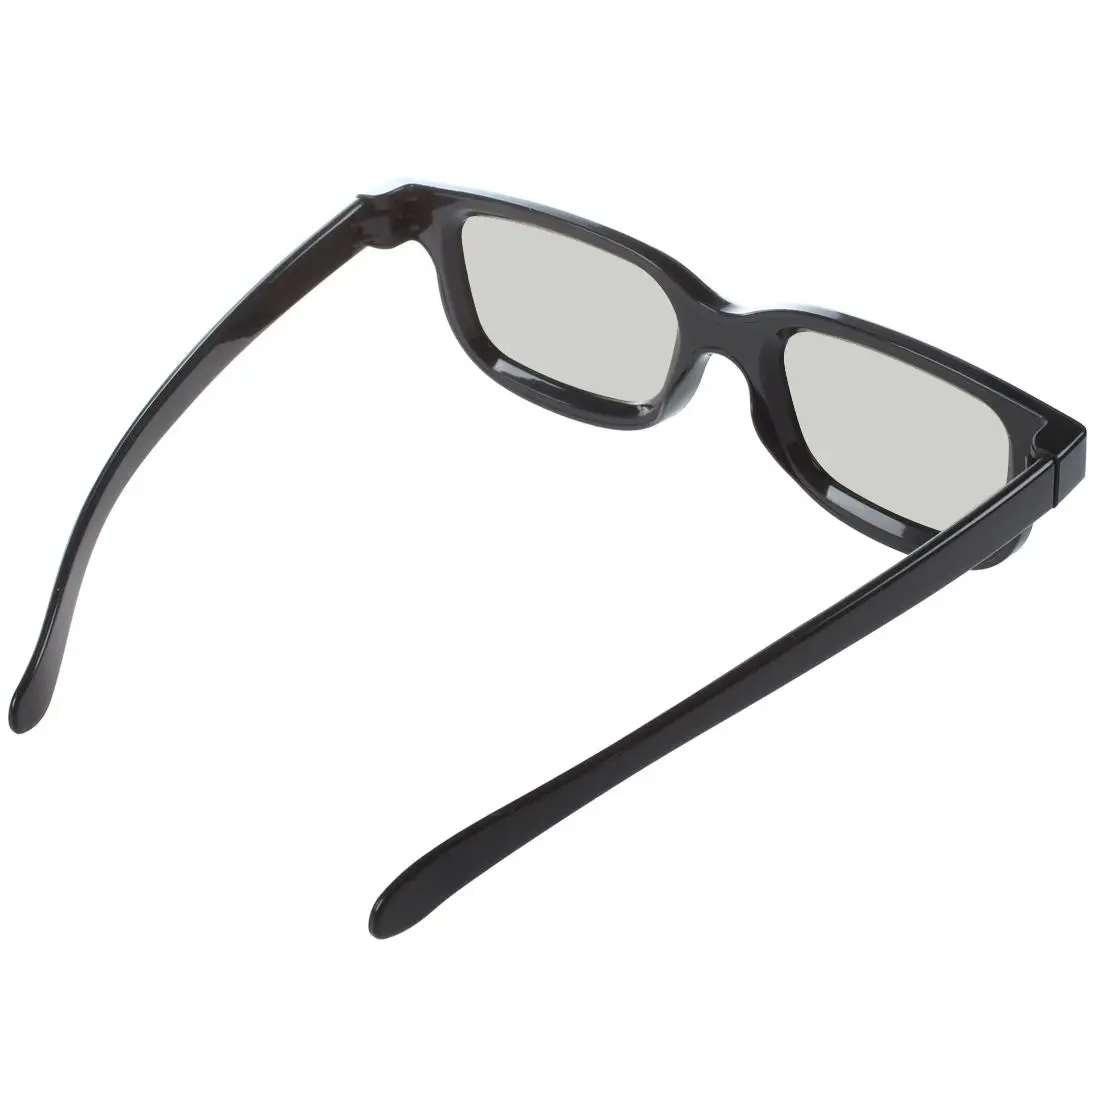 3D очки для LG Cinema TV-2 пары 